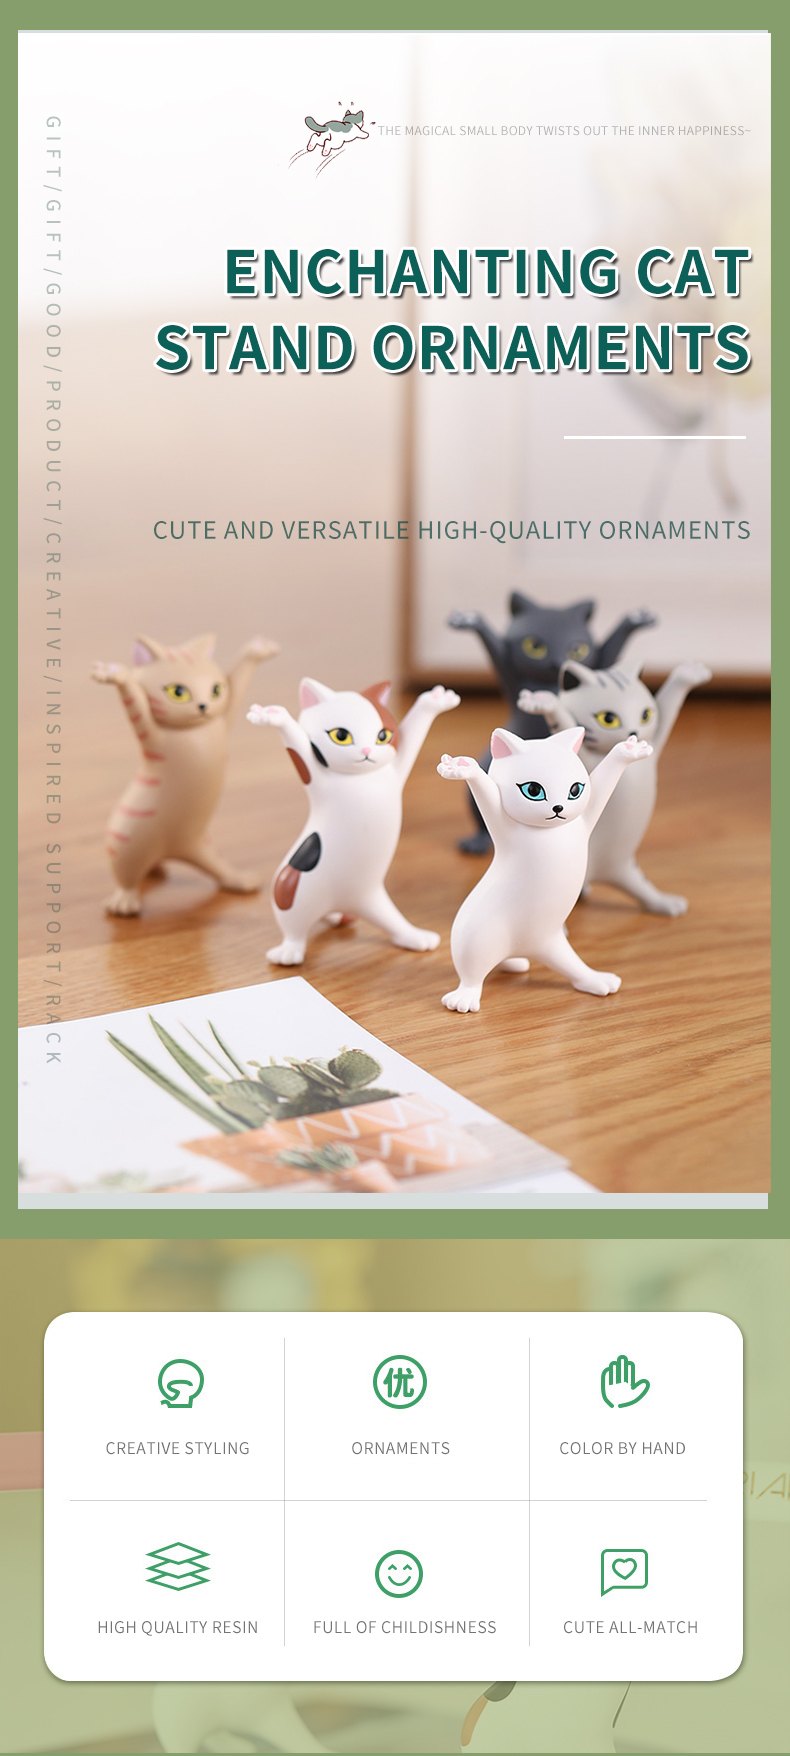 1-PC-Cartoon-Dancing-Cat-Figure-Doll-Figurines-Handmade-Enchanting-Kittens-Toy-for-Office-Pen-Holder-1838450-1